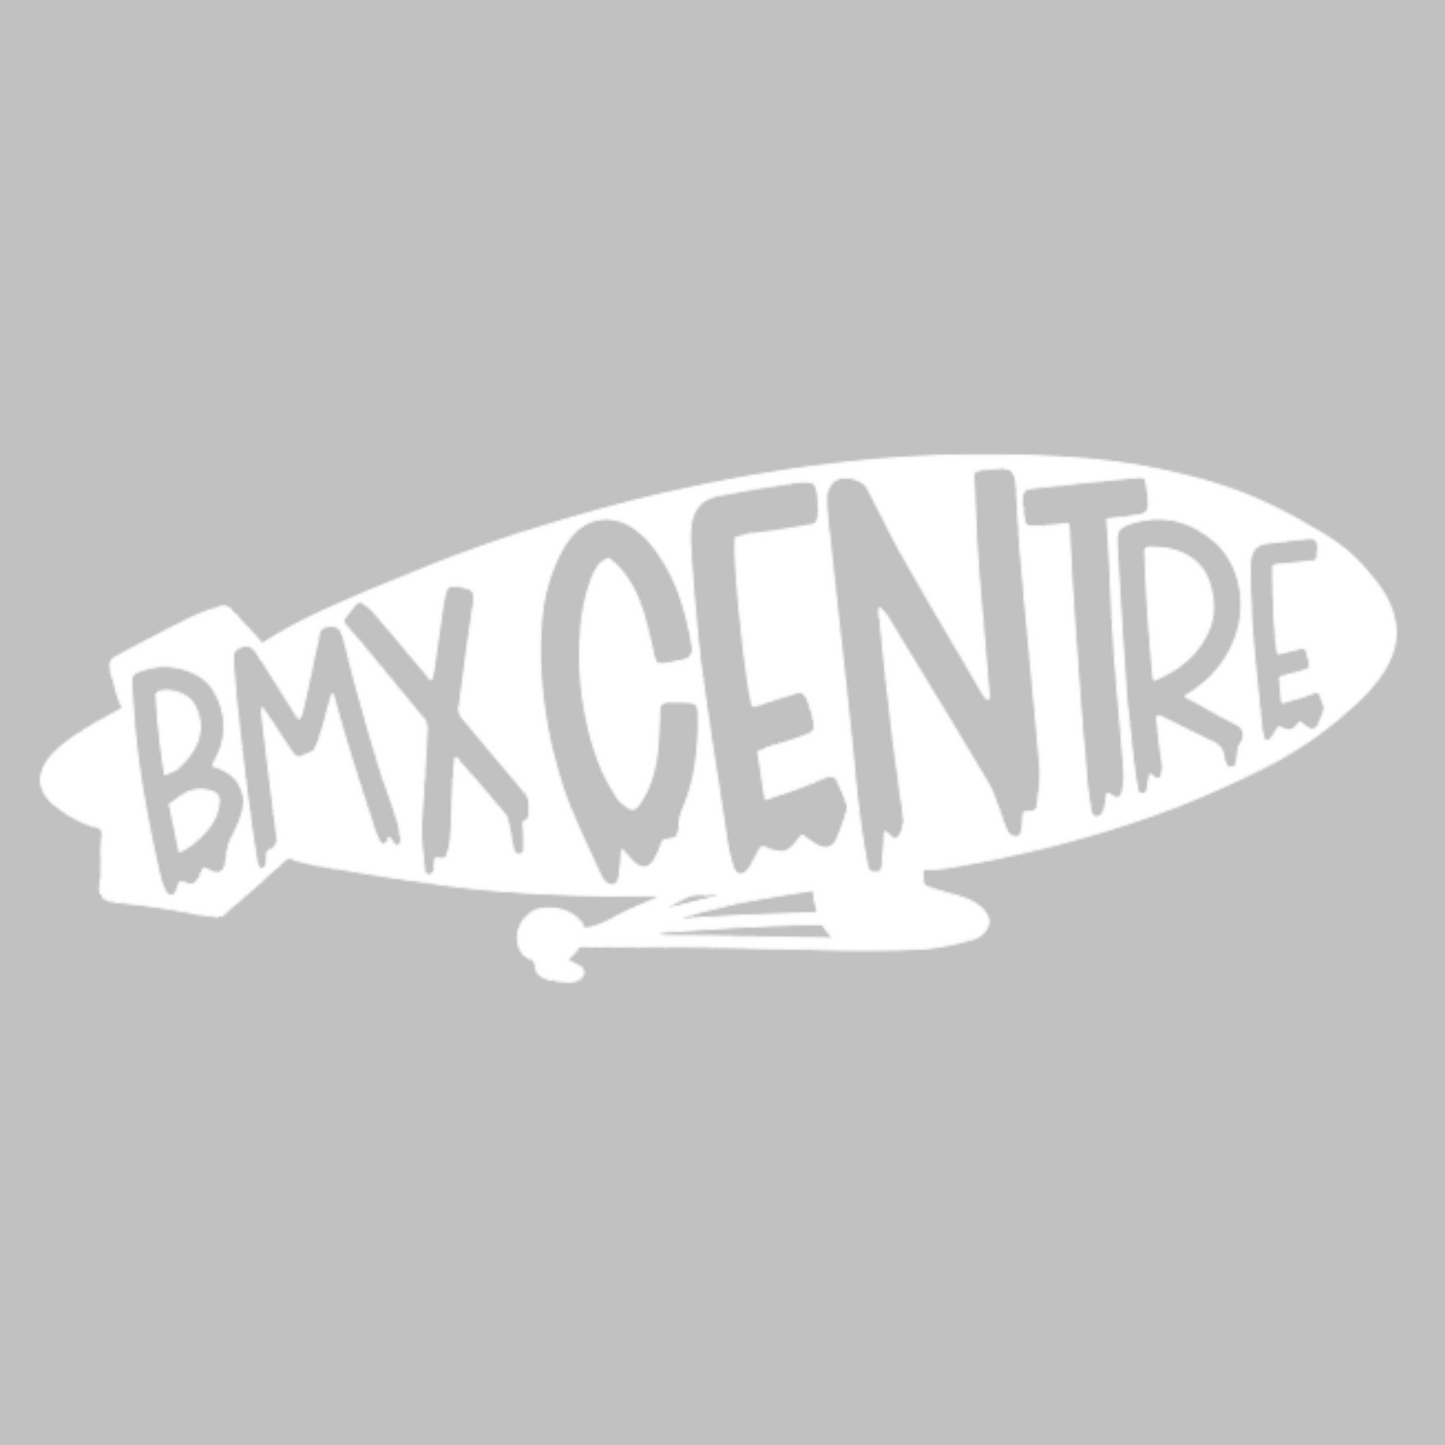 BMX Centre Blimp Vinyl Cut Sticker